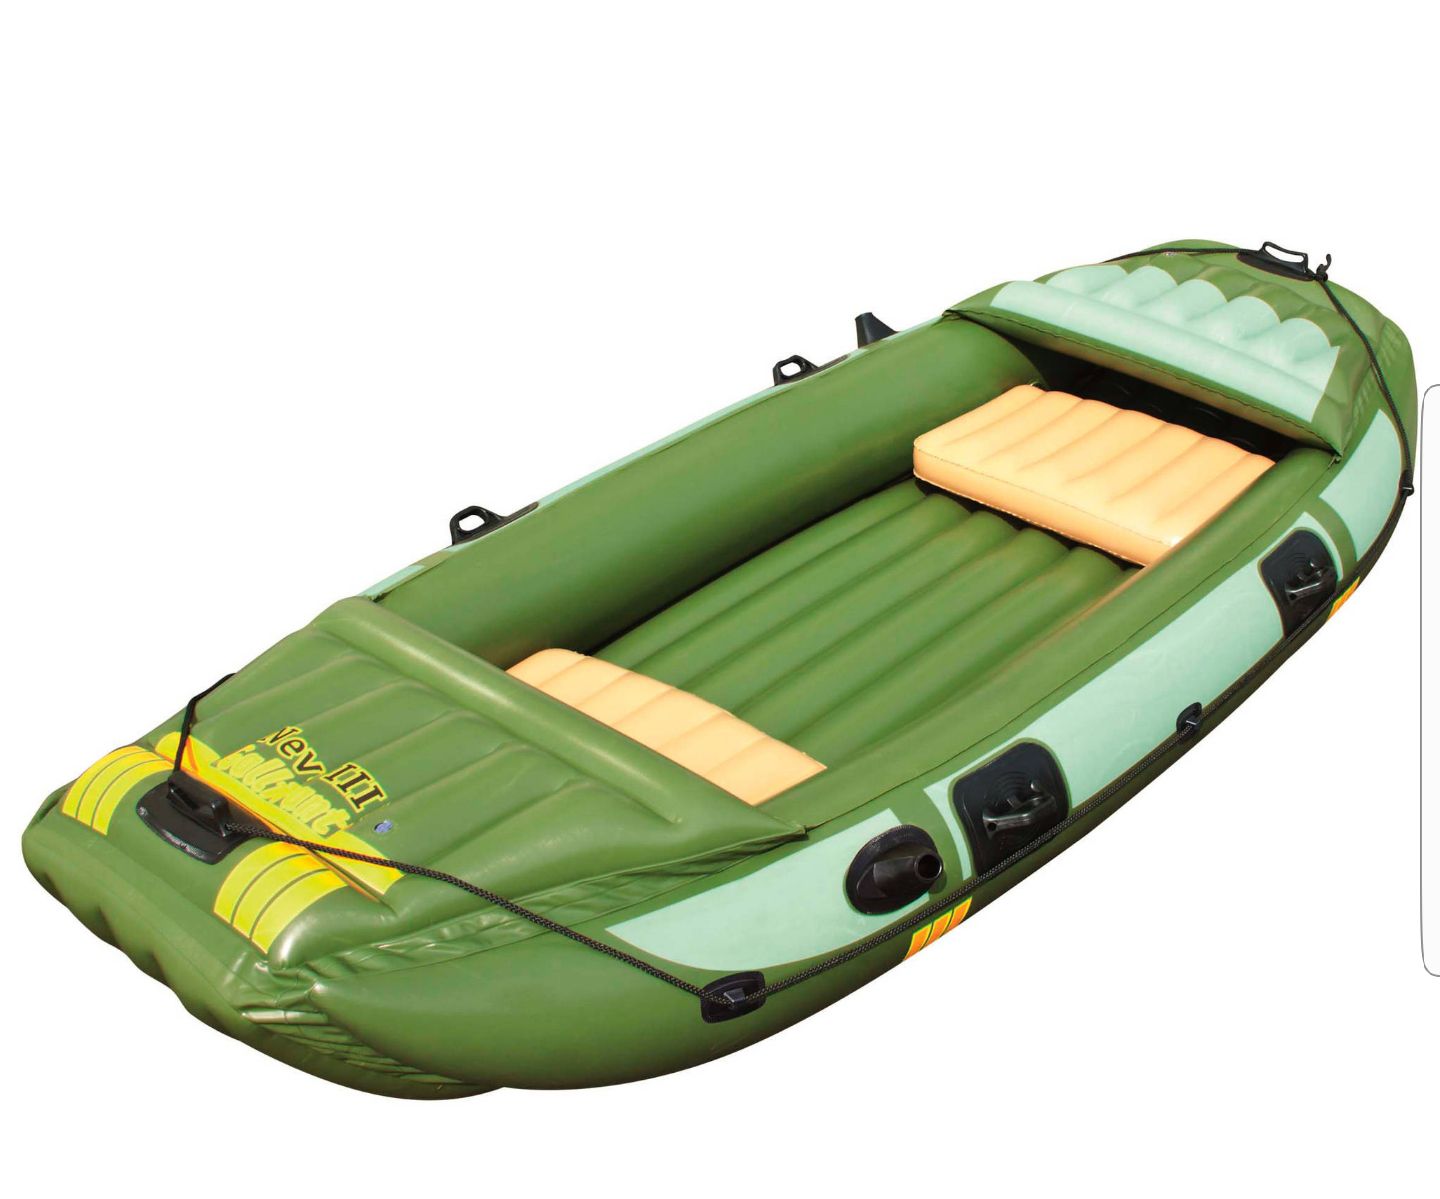 Bestway Hydro Force 124" x 49" Neva III Inflatable Boat/Raft with Oars